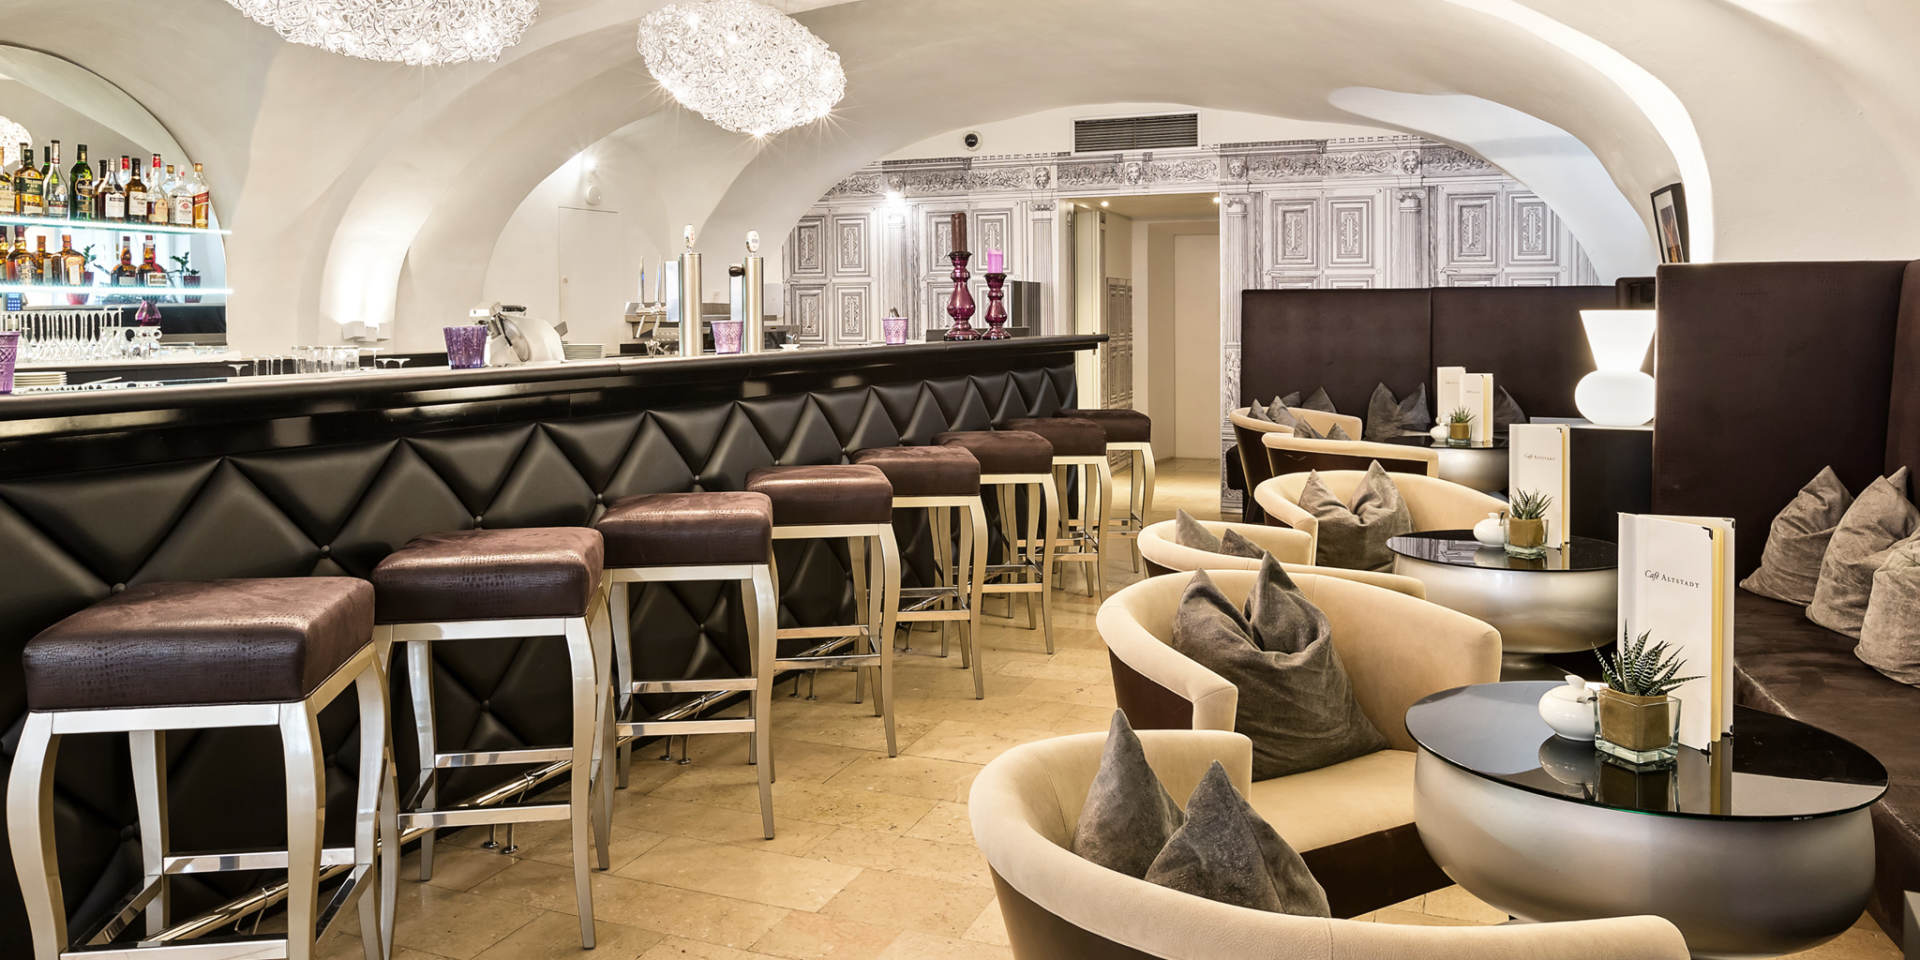 Radisson Blu Hotel Altstadt - cafe © Austria Trend Hotels